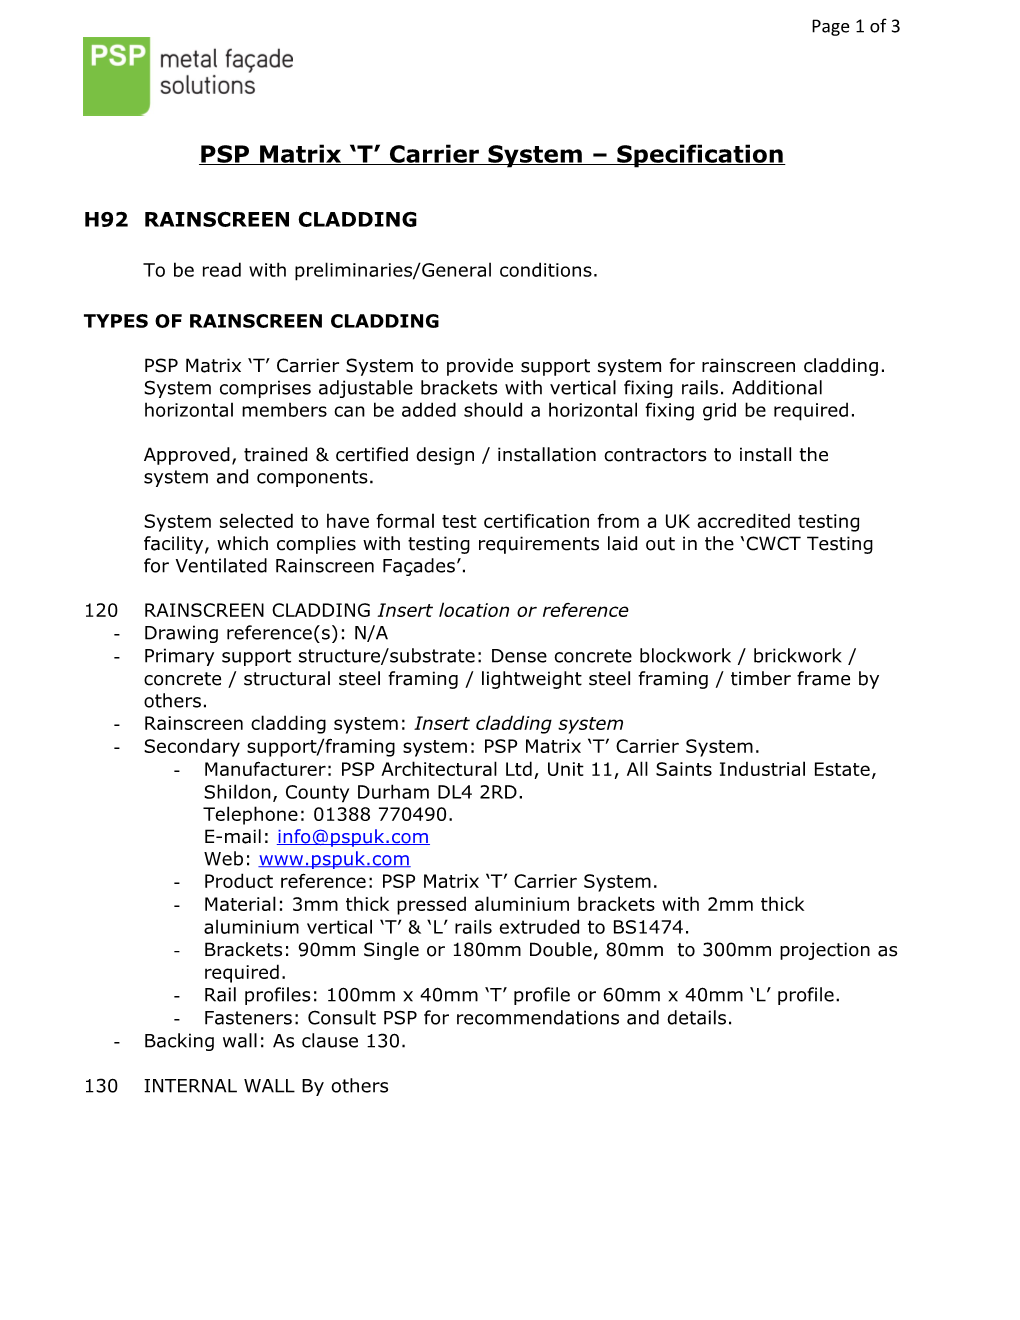 PSP Matrix T Carrier System Specification